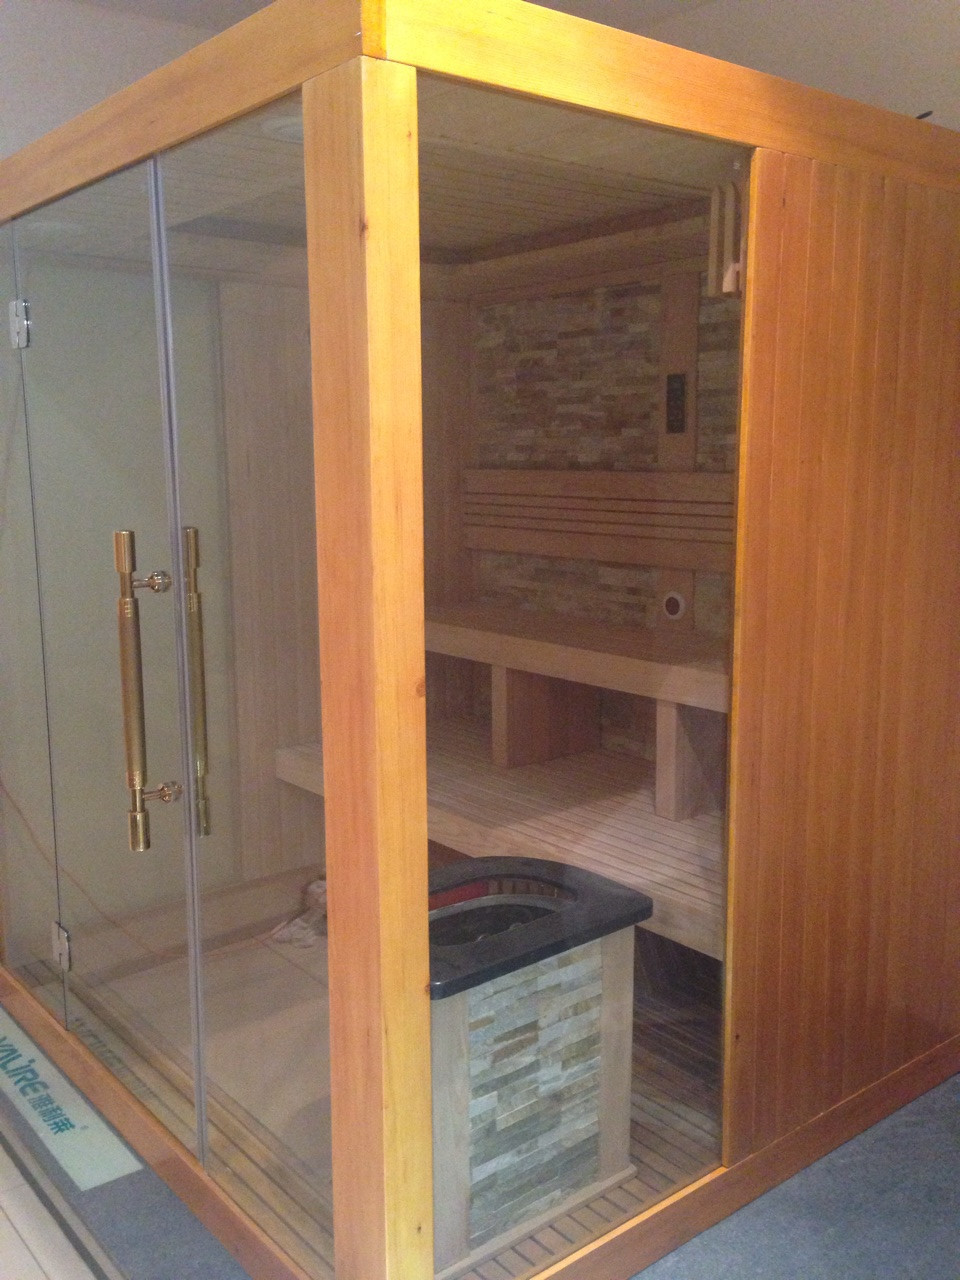 Juno Luxury Steam Sauna Room with Shower - Model Number